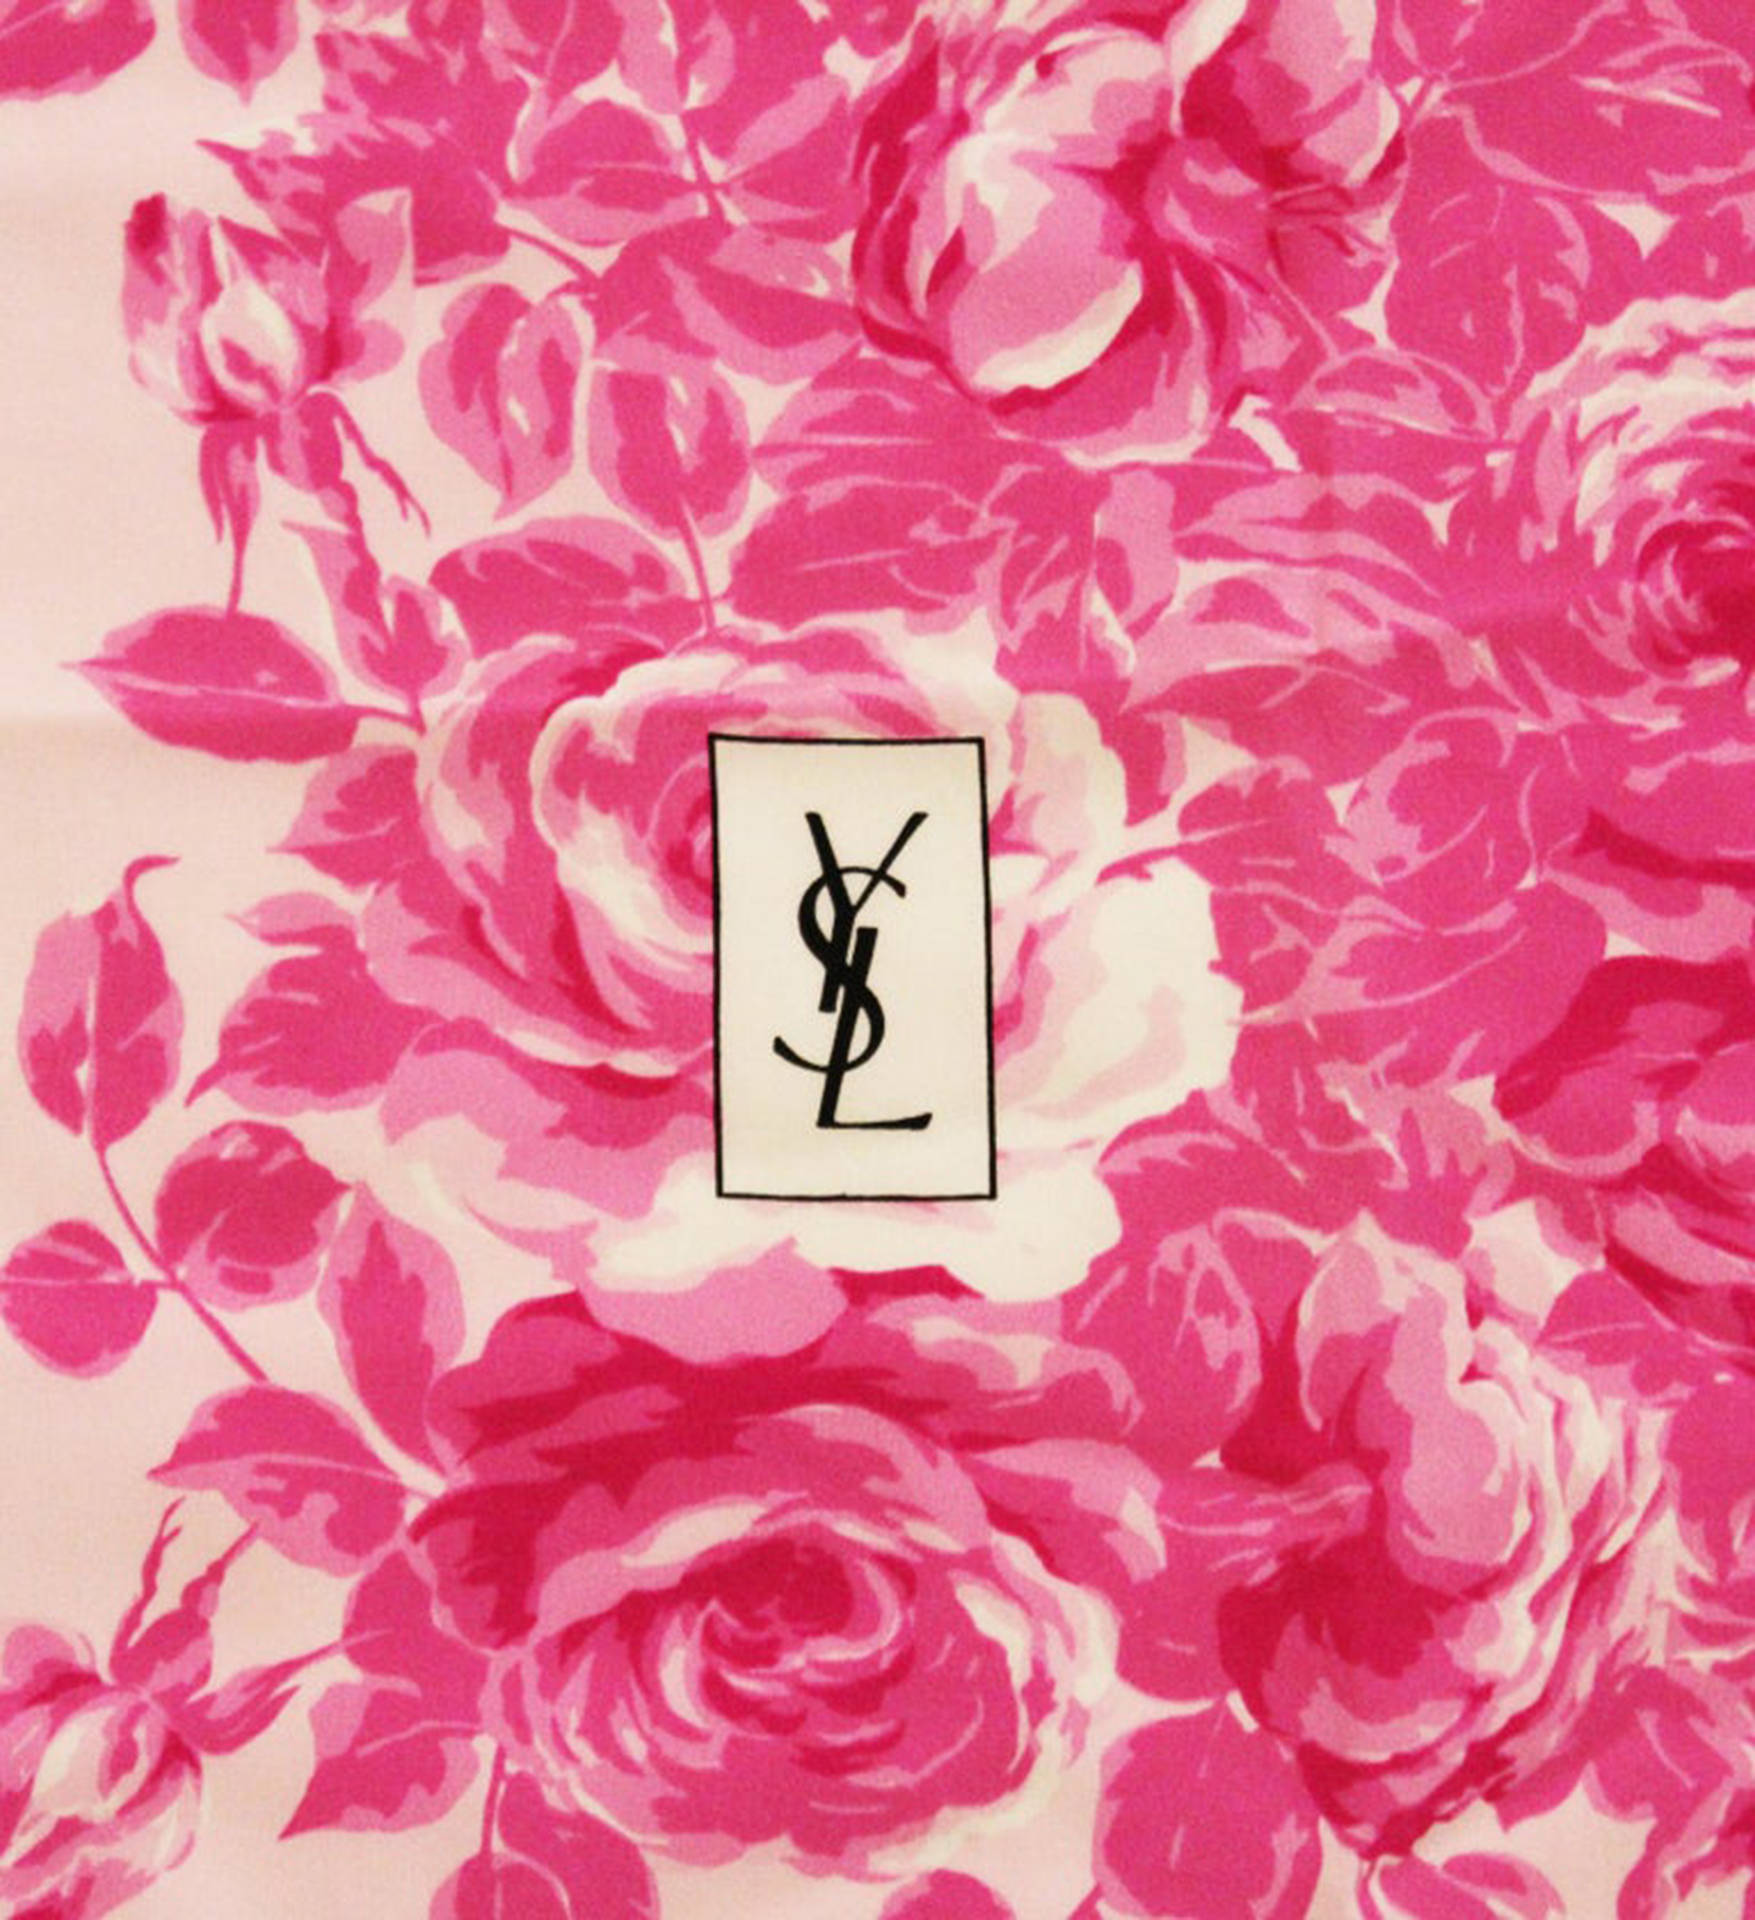 Download Ysl Logo Rose Scarf Wallpaper Wallpapers Com